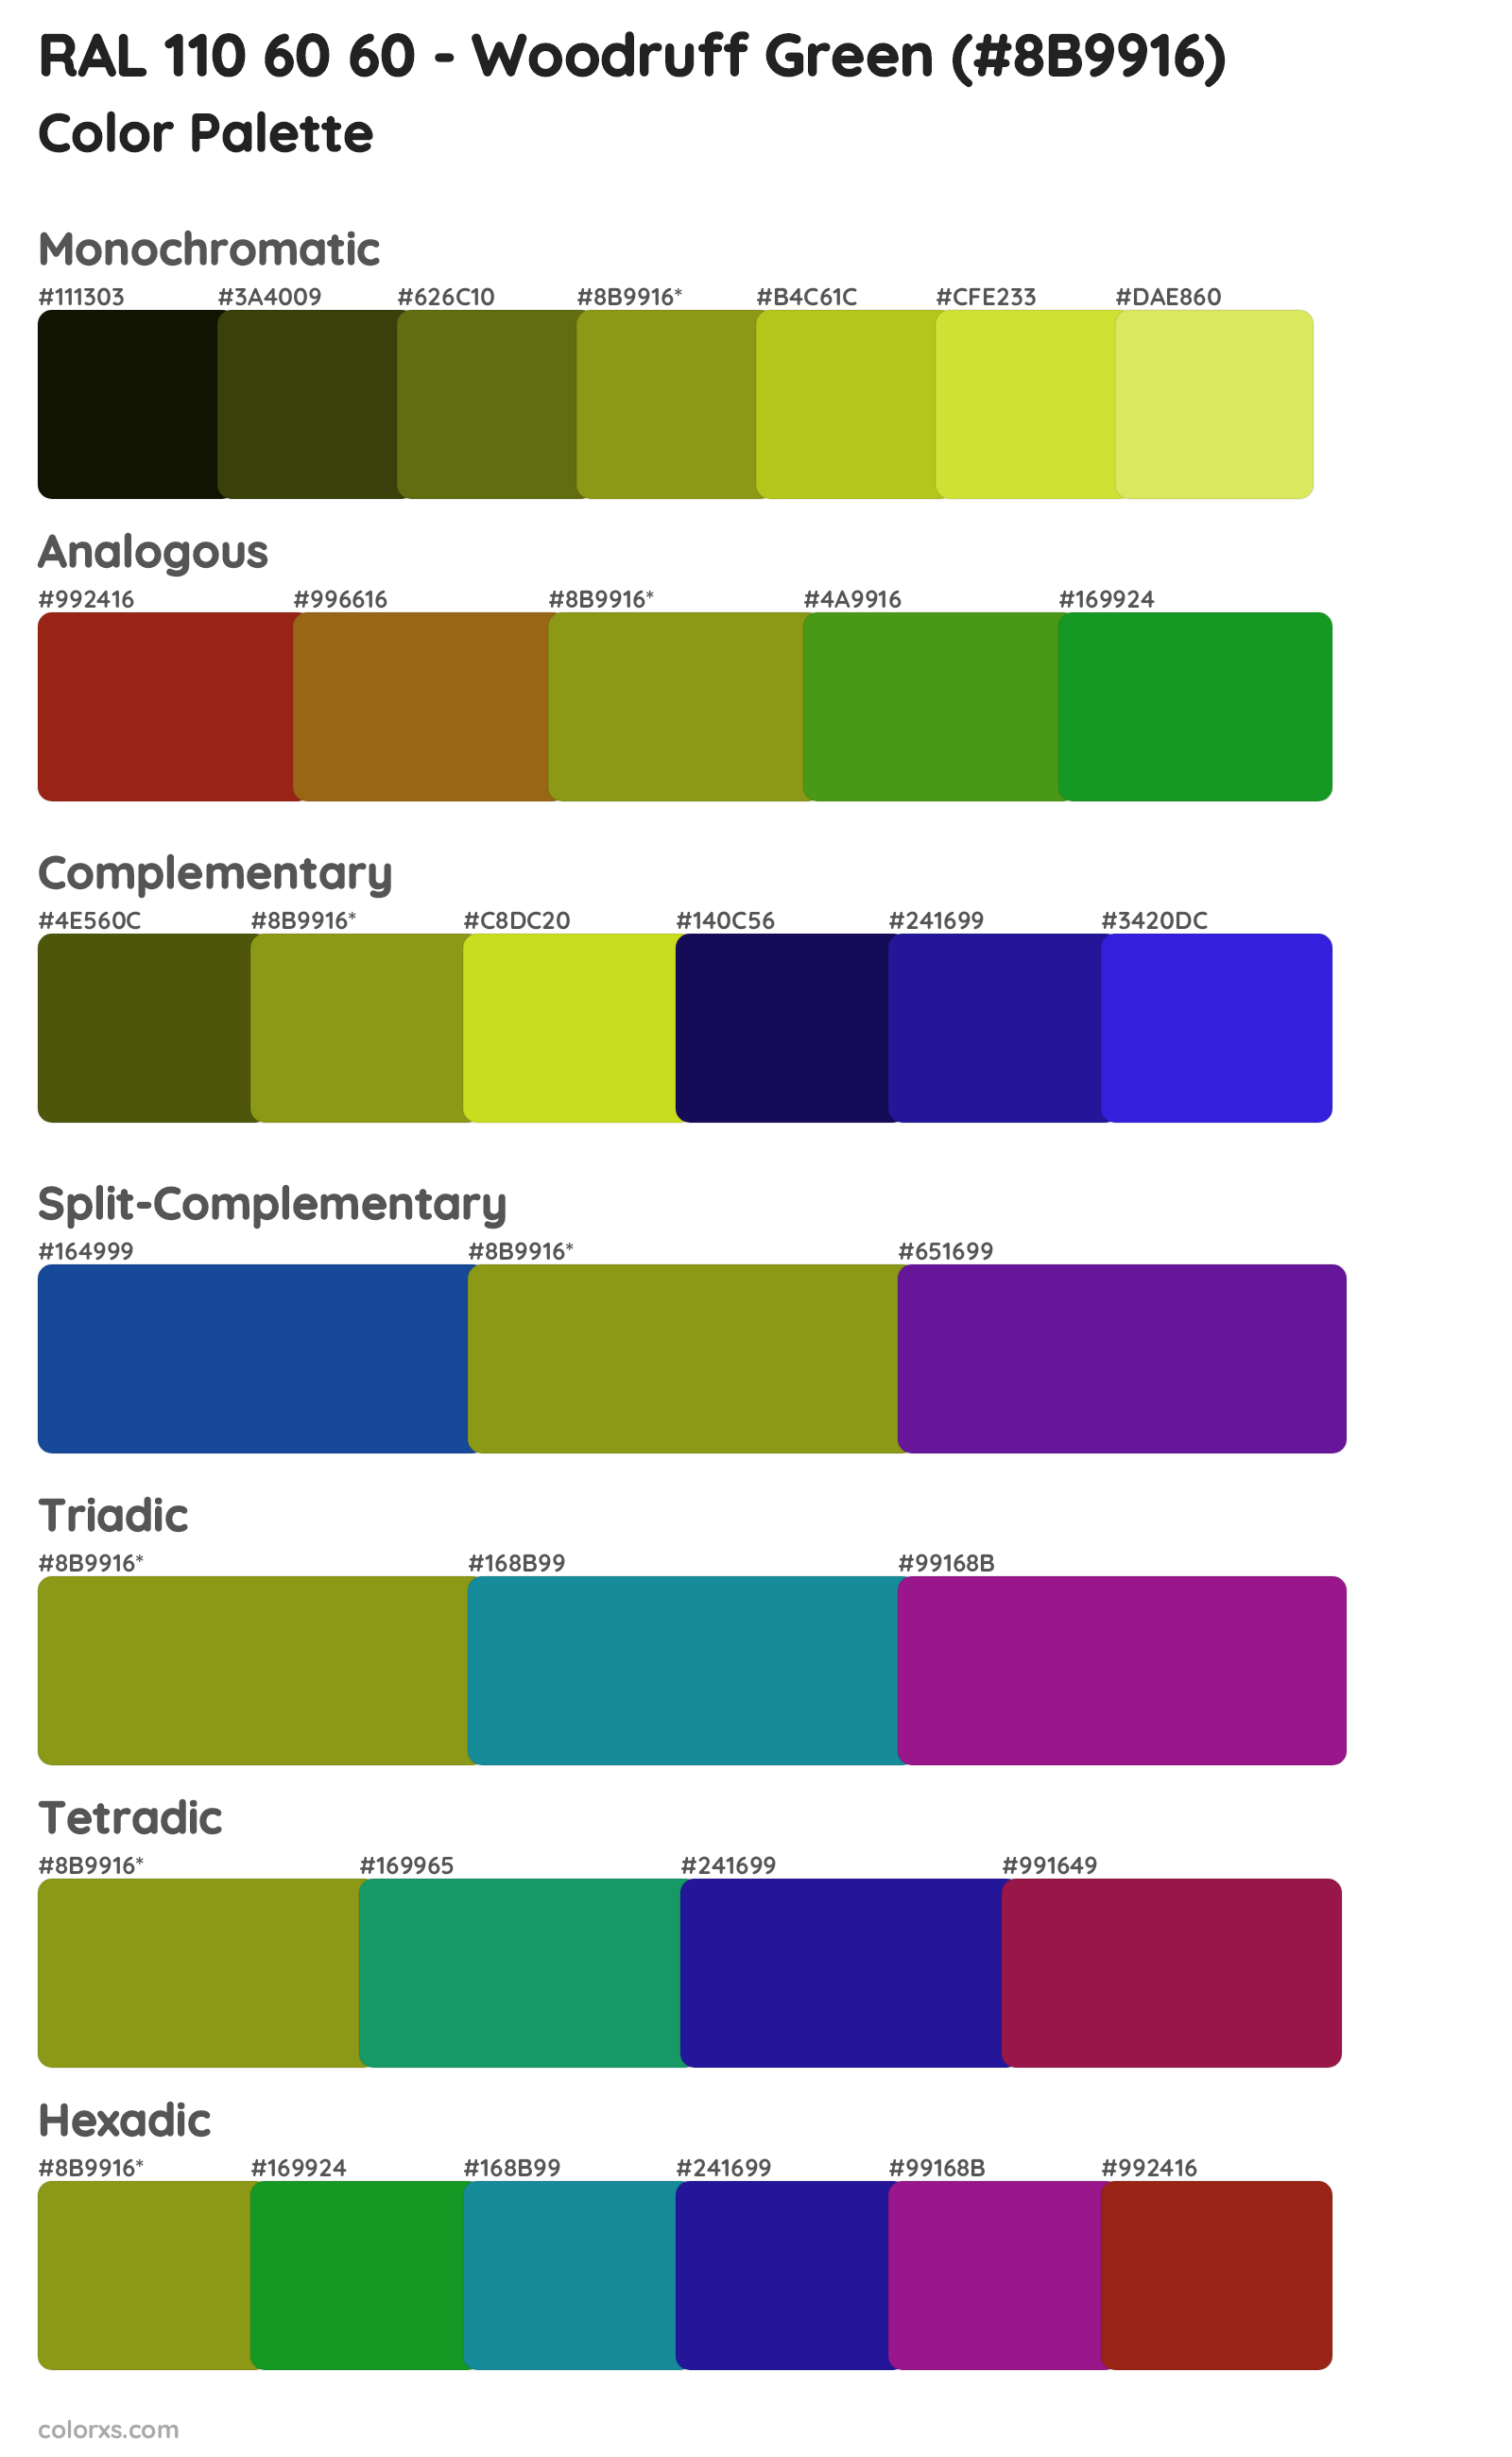 RAL 110 60 60 - Woodruff Green Color Scheme Palettes